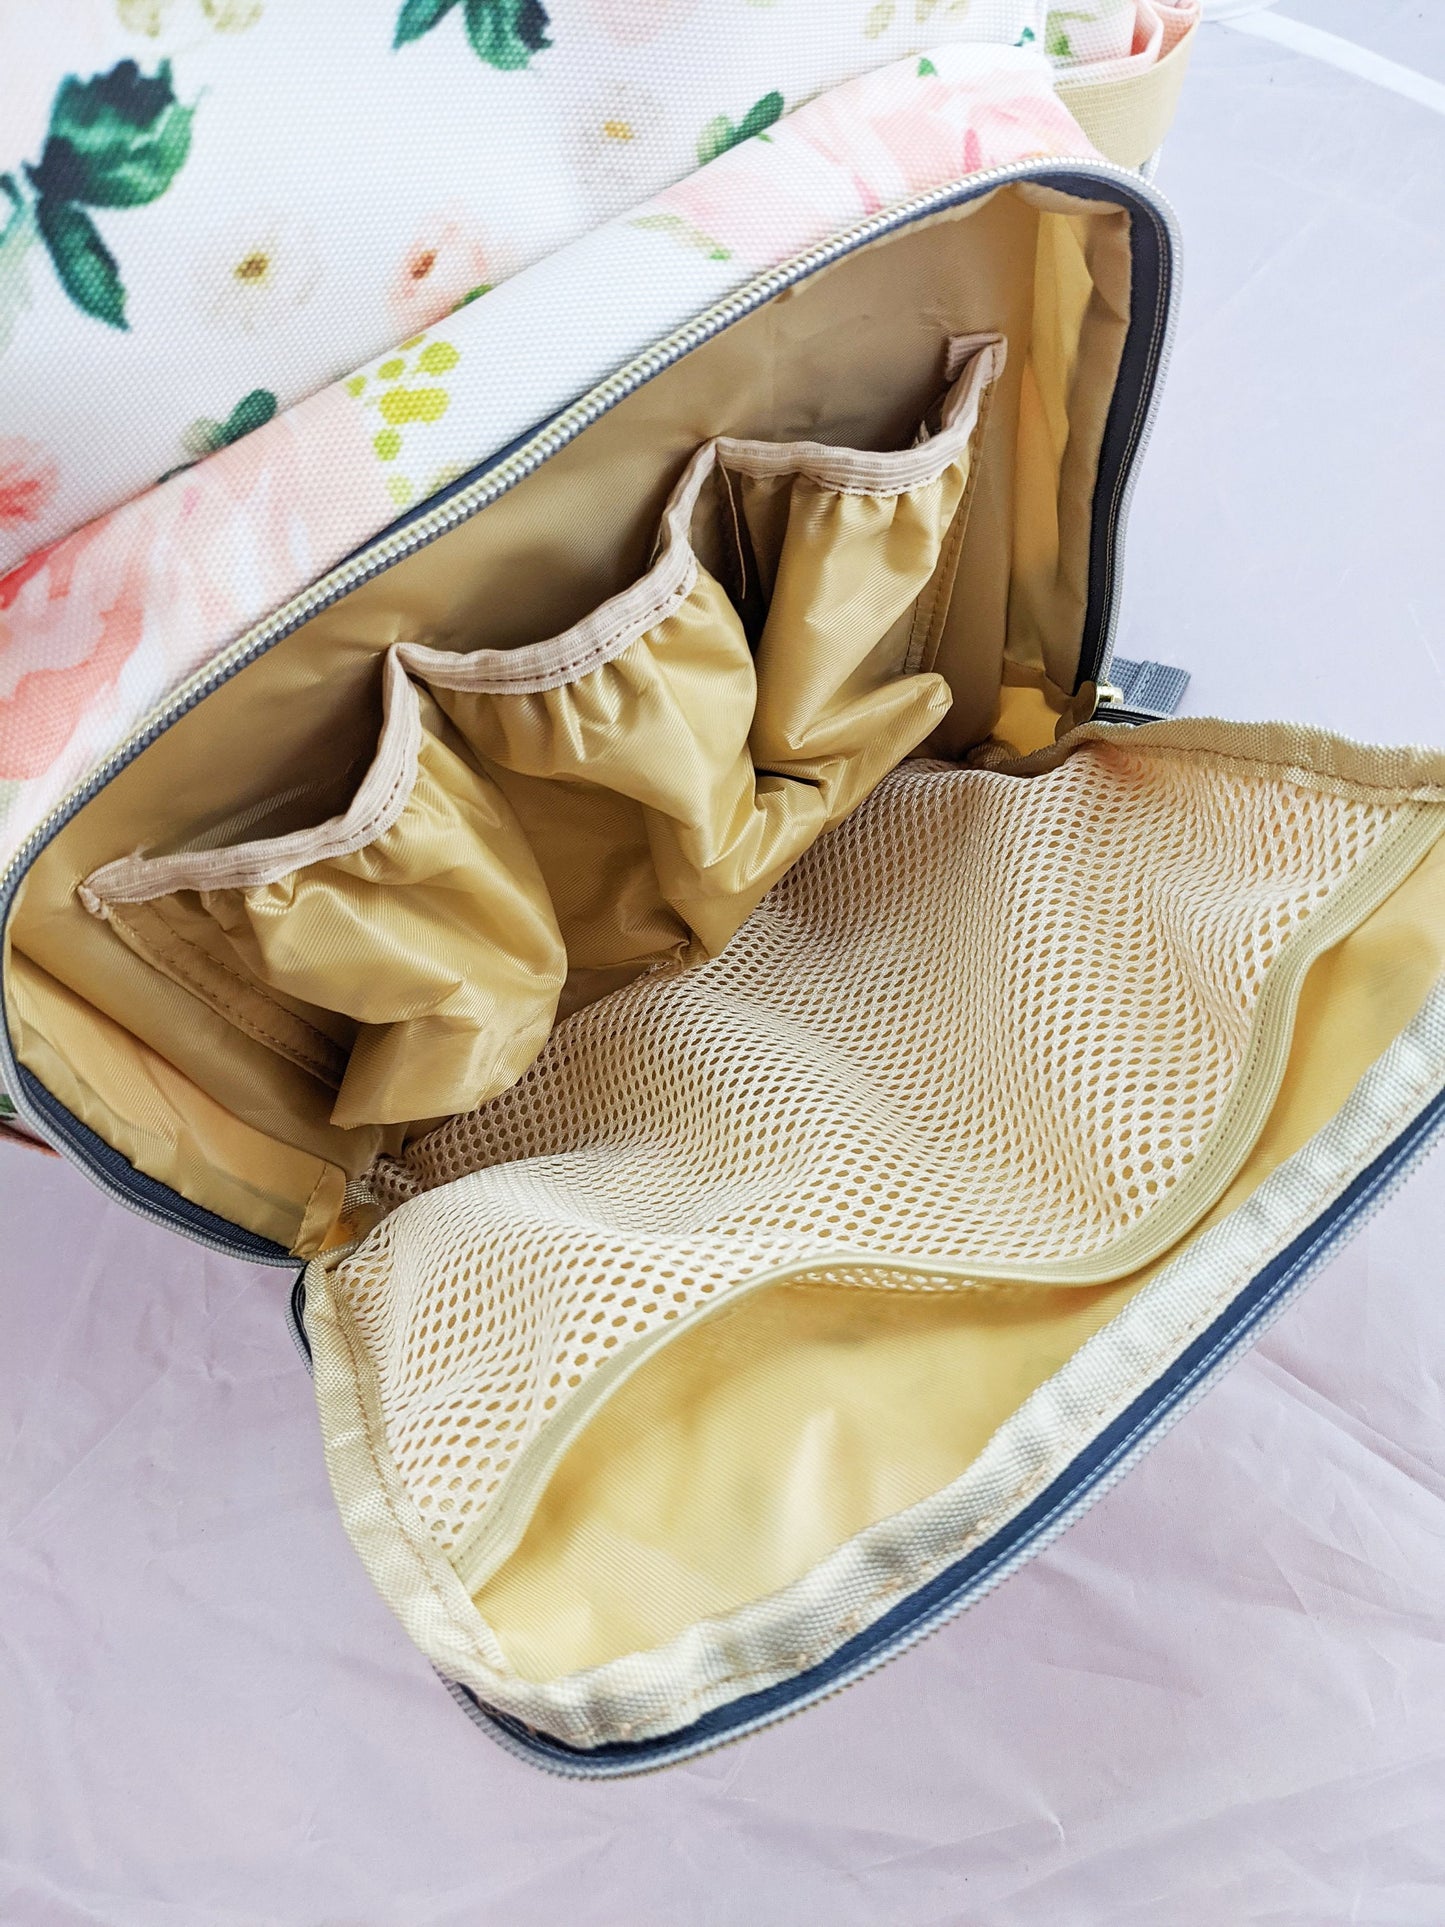 Blush Florals with Safari Animals Personalized Diaper Bag